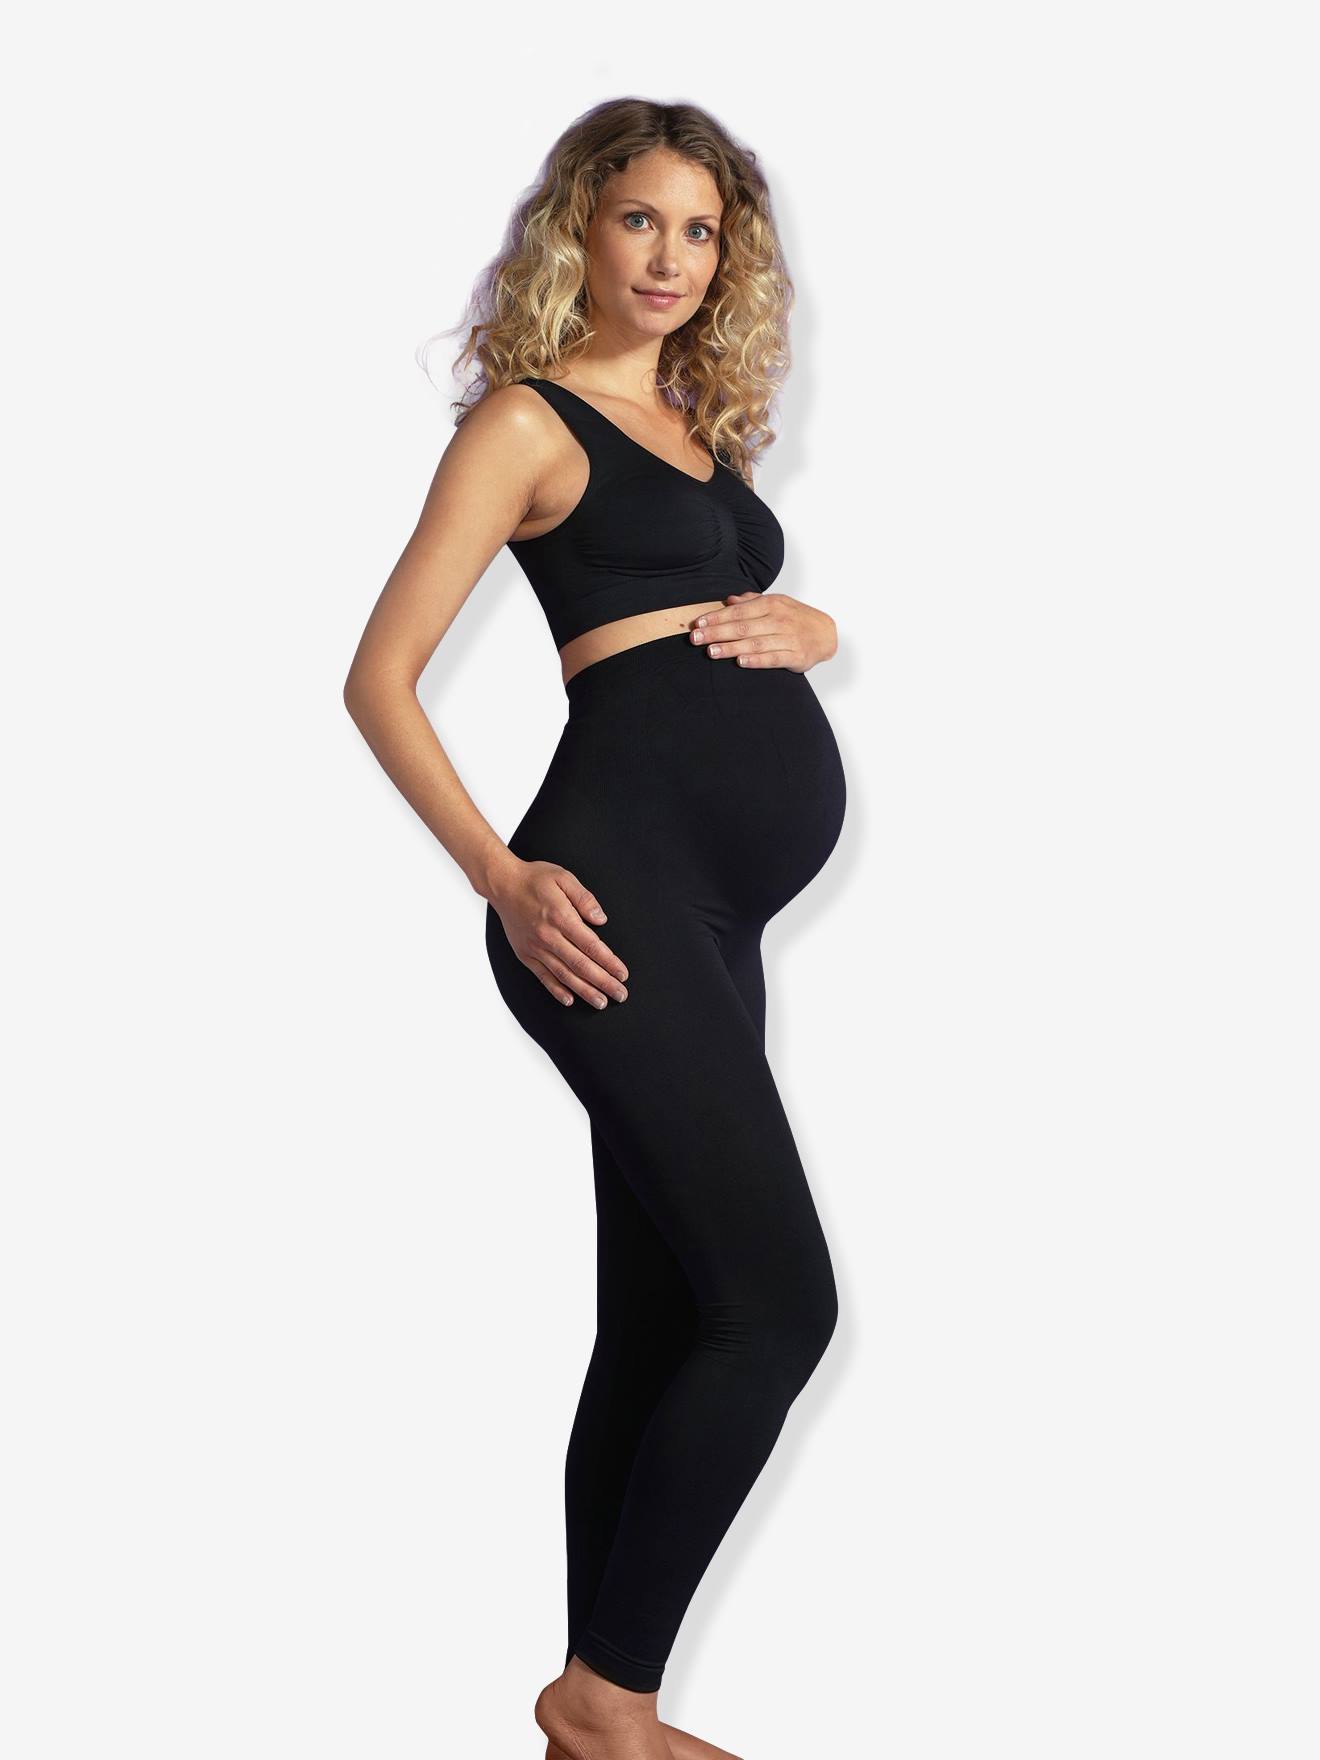 https://media.vertbaudet.co.uk/Pictures/vertbaudet/158951/maternity-support-leggings-in-stretch-shape-memory-fabric-by-carriwell.jpg